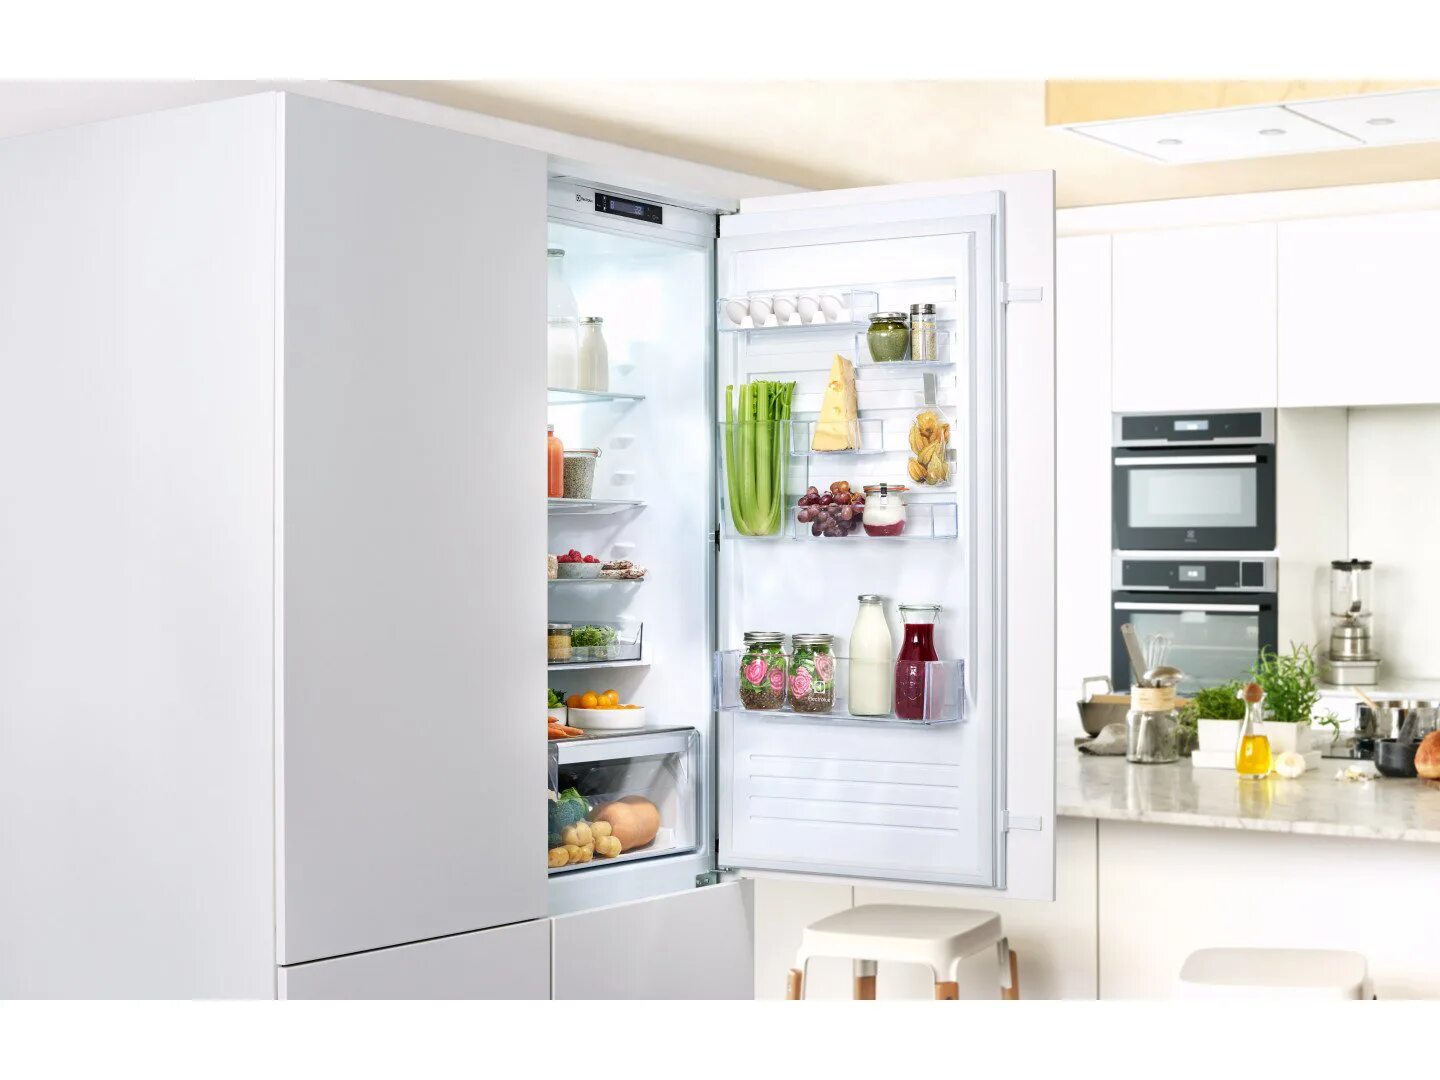 Холодильник ампер. Встраиваемый холодильник Electrolux enn3074efw. Встроенный холодильник Электролюкс. Встраиваемый холодильник Электролюкс. Встраиваемый холодильник Electrolux enn.